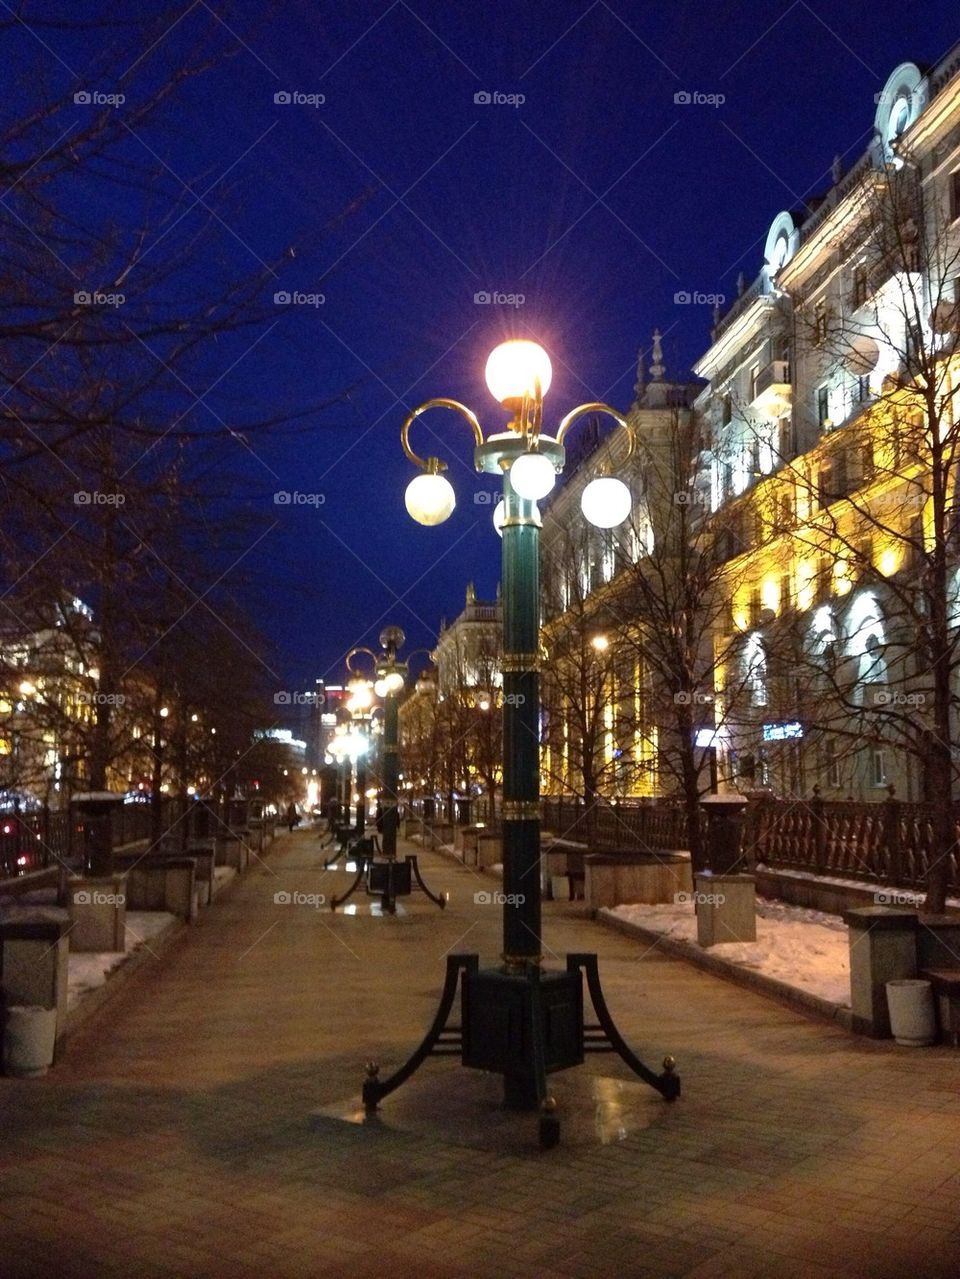 Lit lamppost on boulevard at night